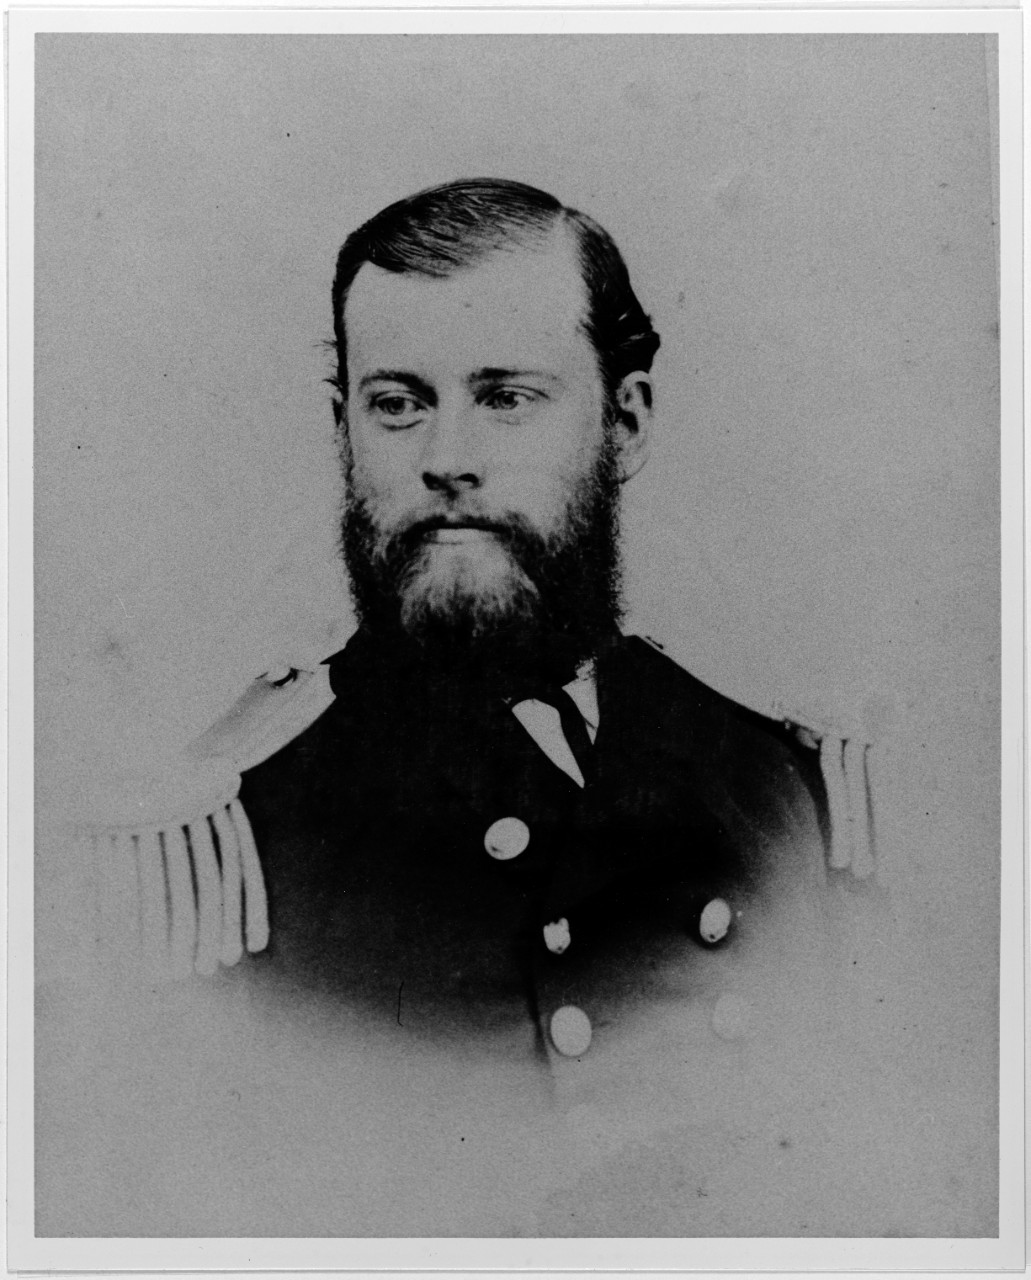 Lieutenant John McGowan, Jr., USN